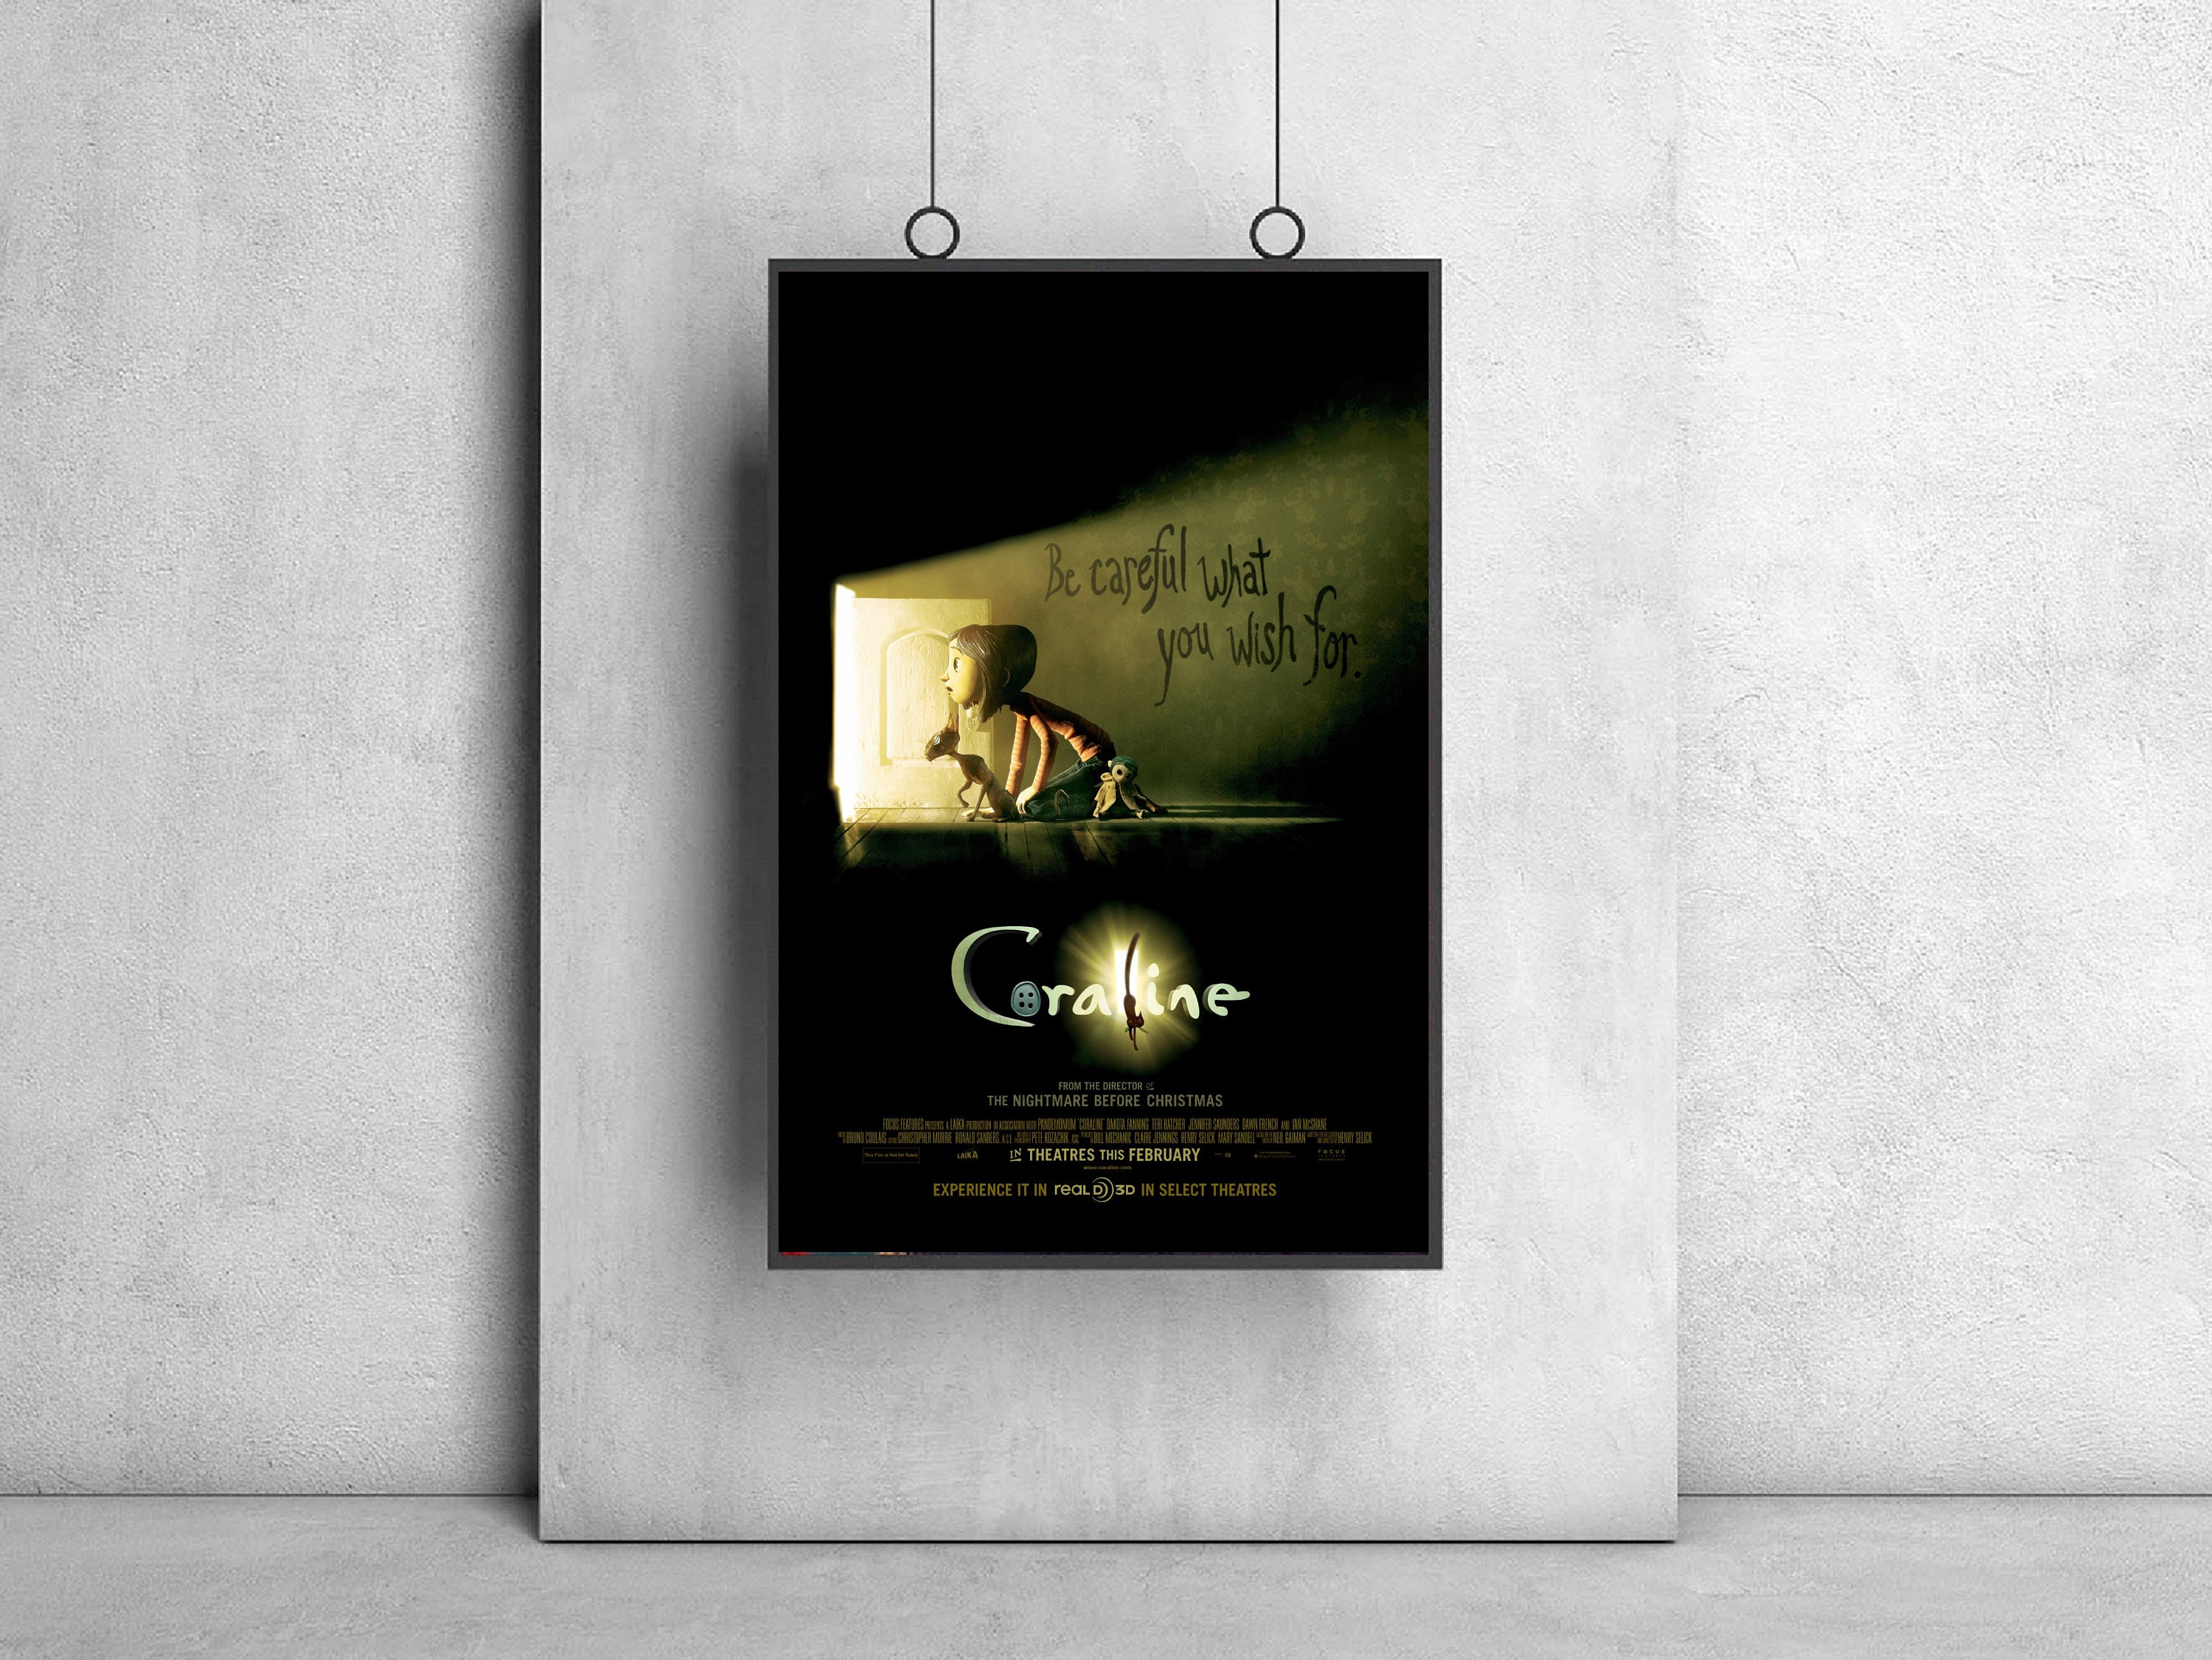 Coraline Movie Poster, Movie Poster sold by Handyman Company, SKU 40904211